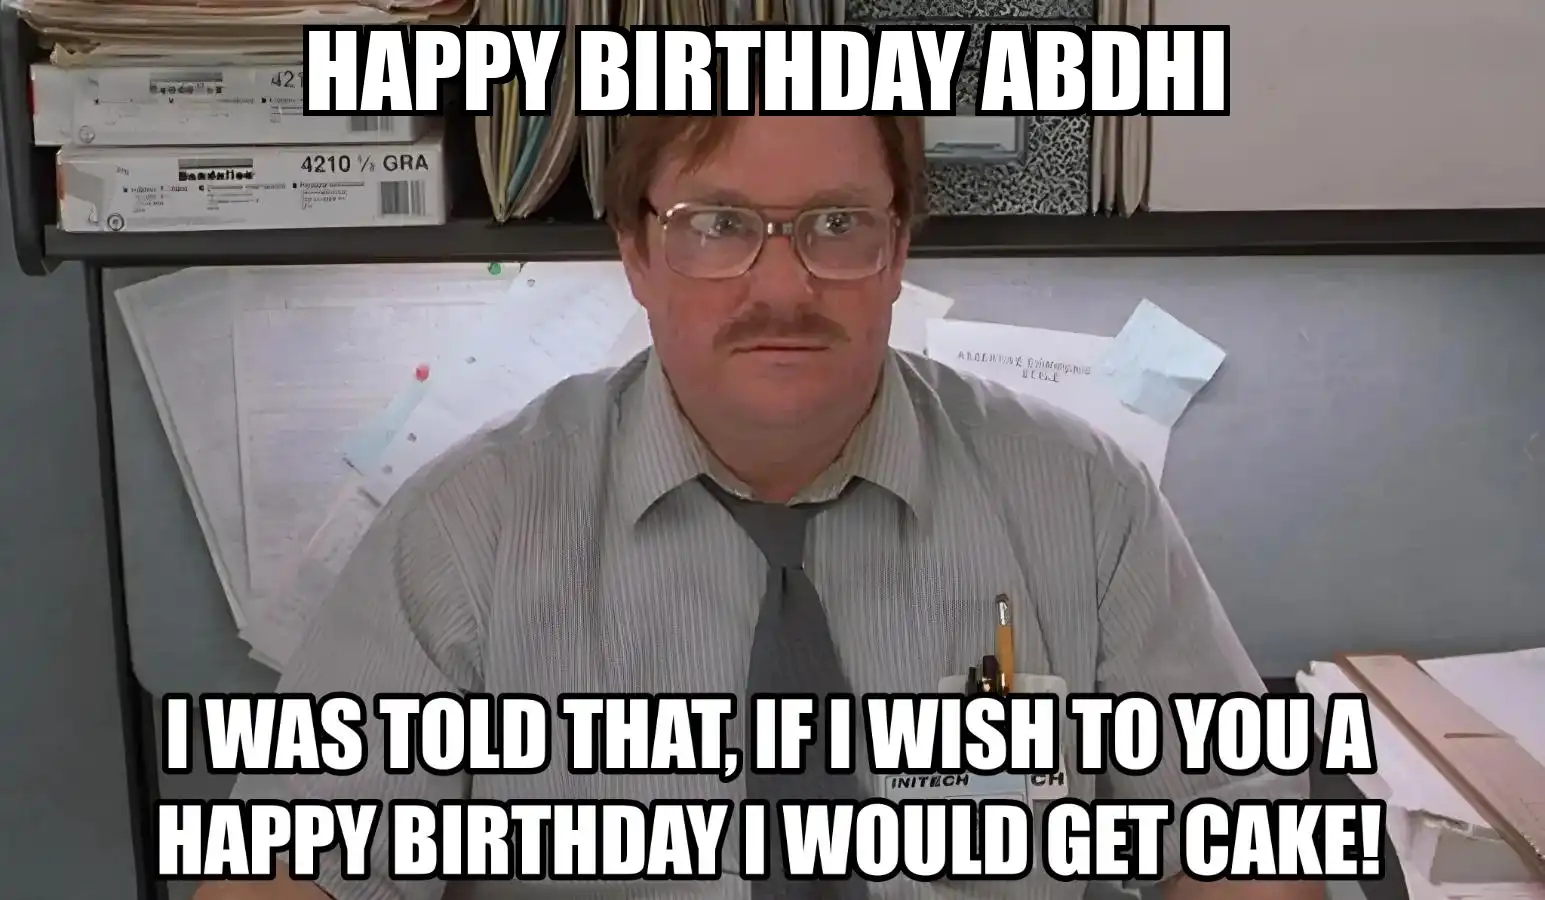 Happy Birthday Abdhi I Would Get A Cake Meme